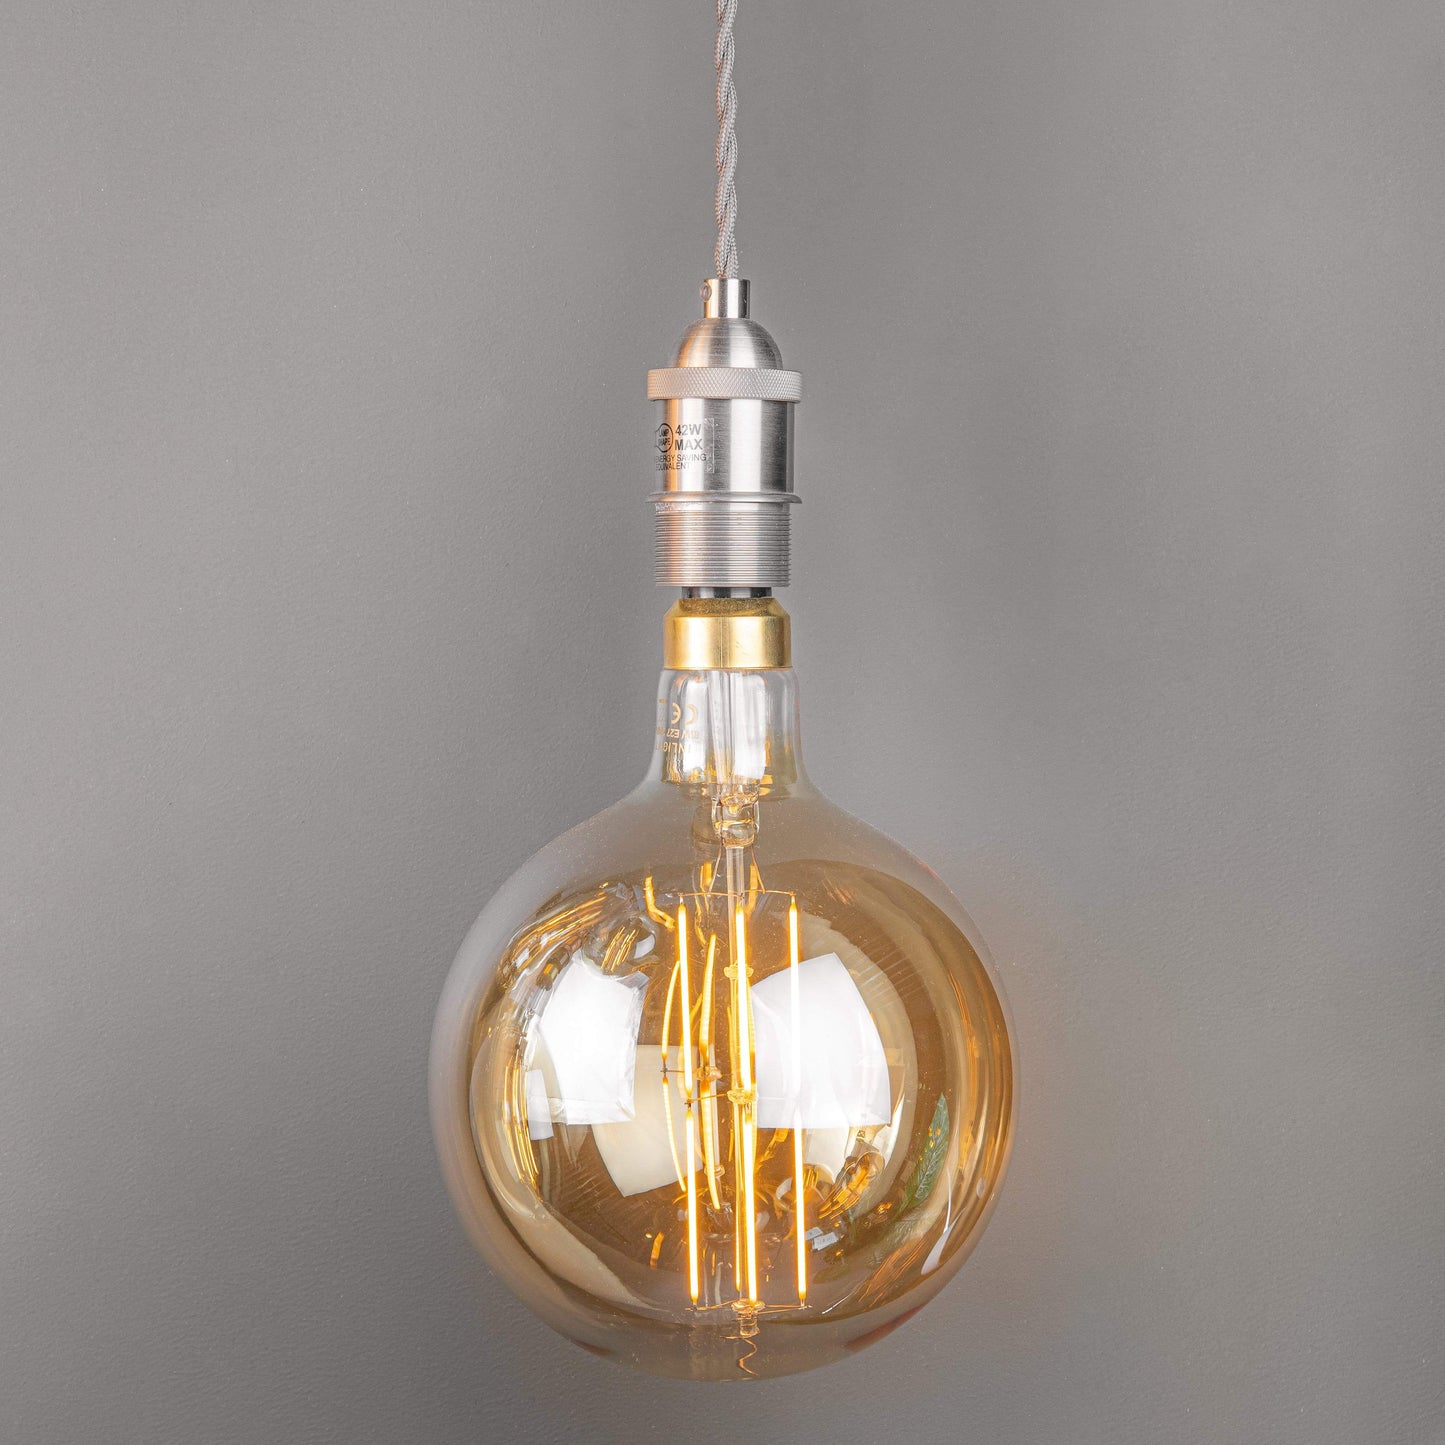 Lights  -  Forum 6W Led Oversized Vintage Filament Bulb G180 - E27  -  50151845